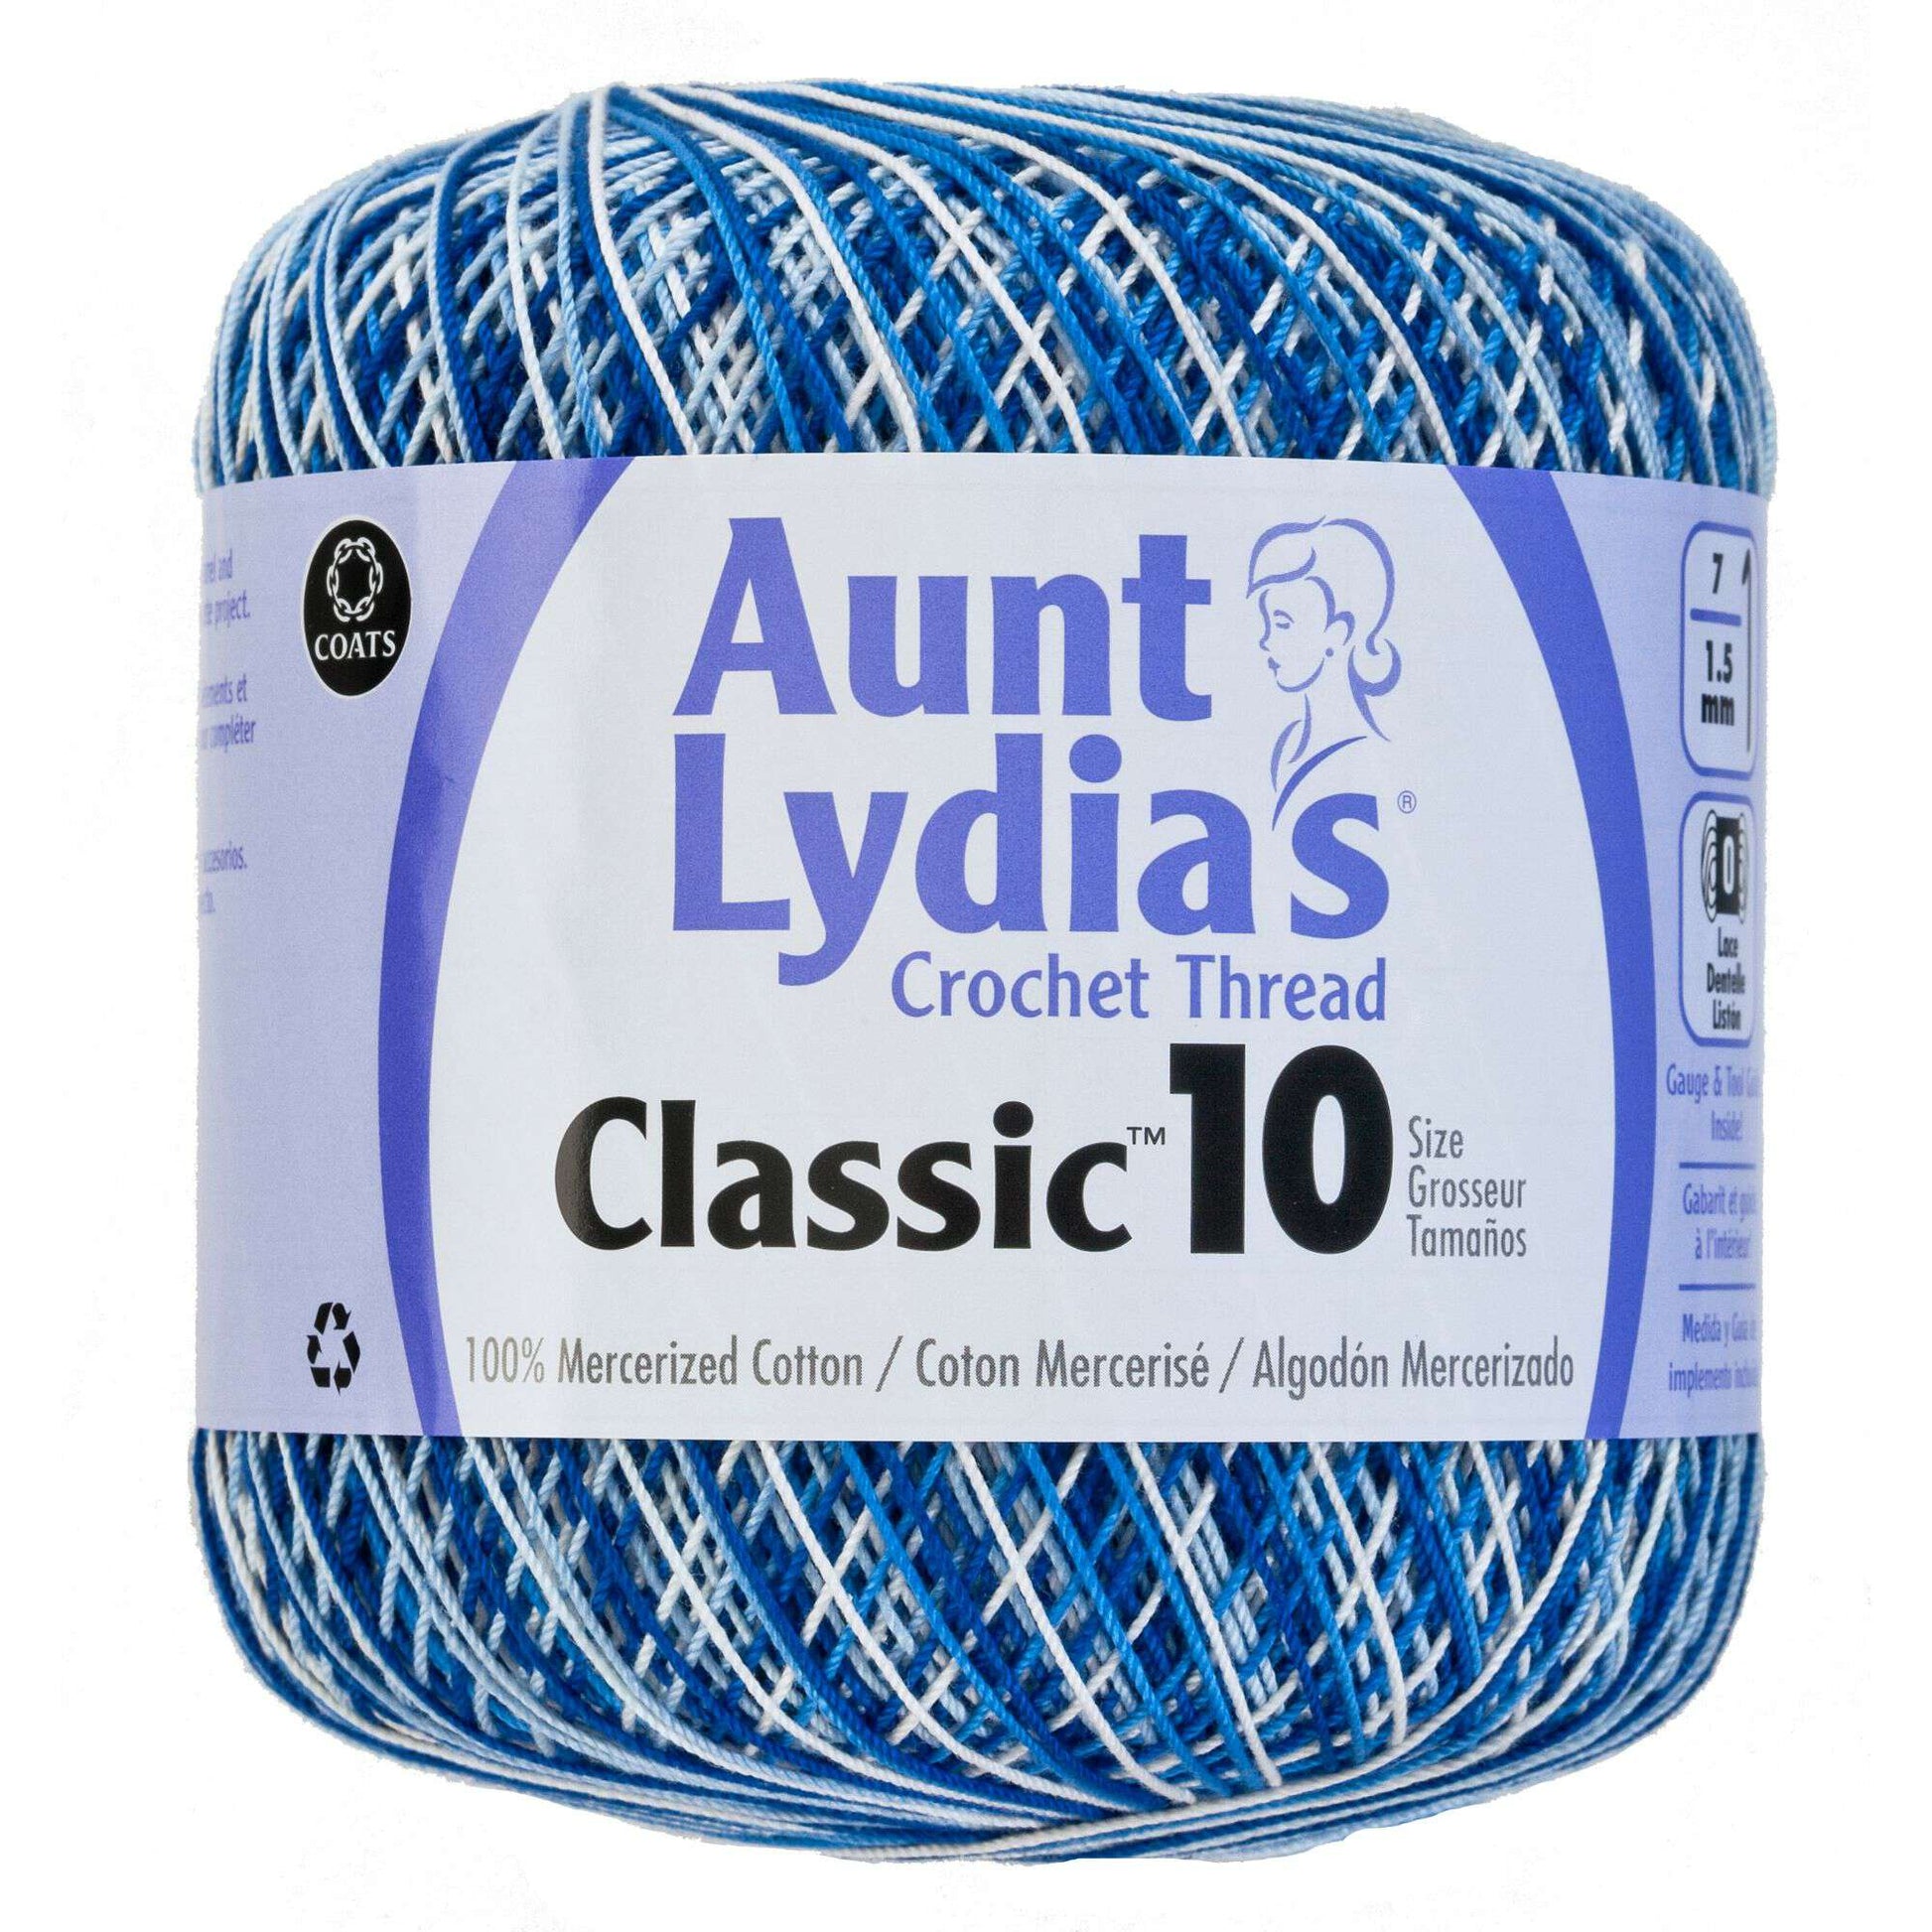 Aunt Lydia's Classic Crochet Thread Size 10 Shaded Blues